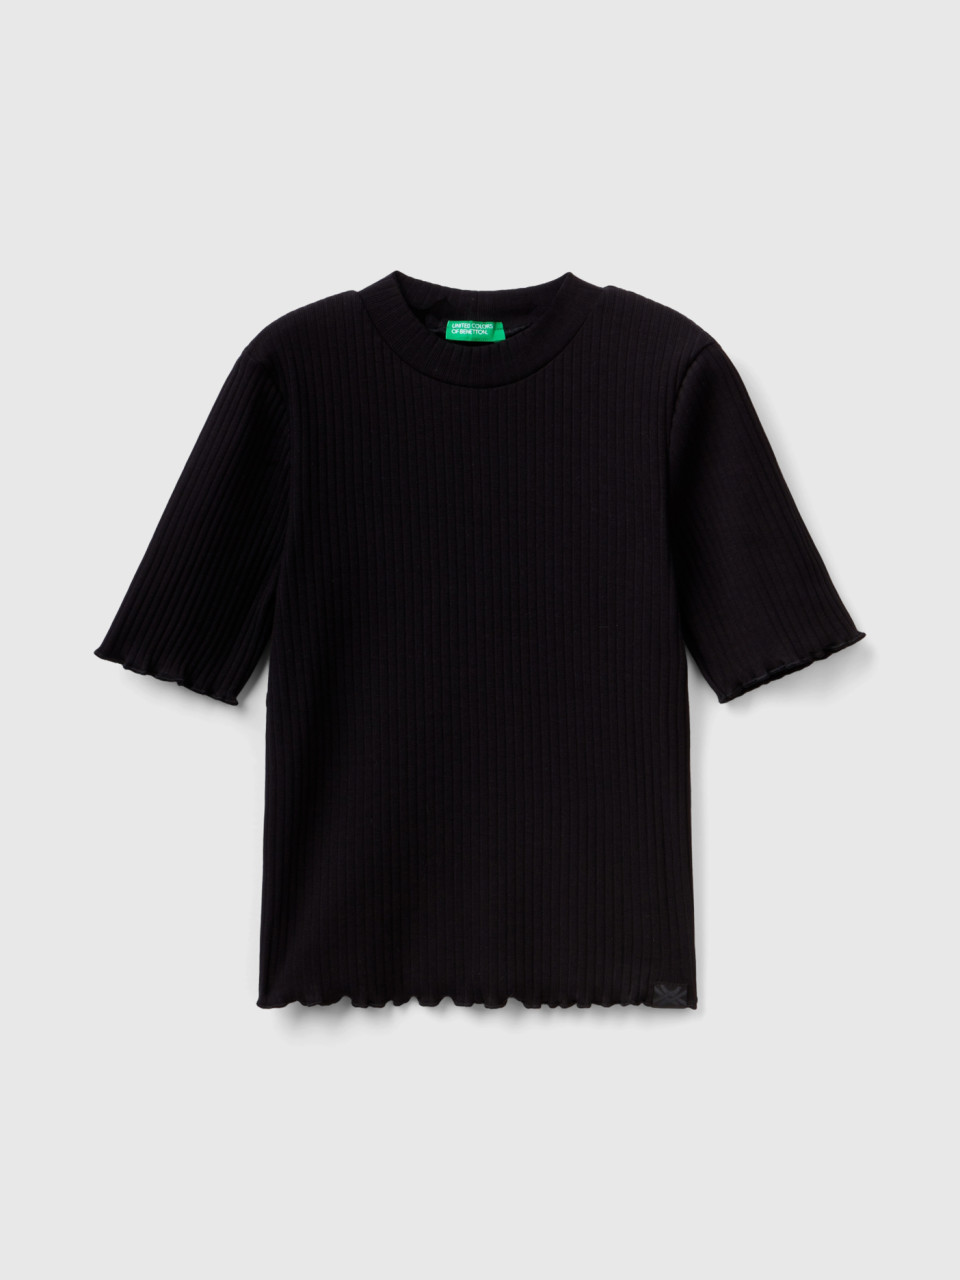 Benetton, Short Sleeve Turtleneck T-shirt, Black, Kids